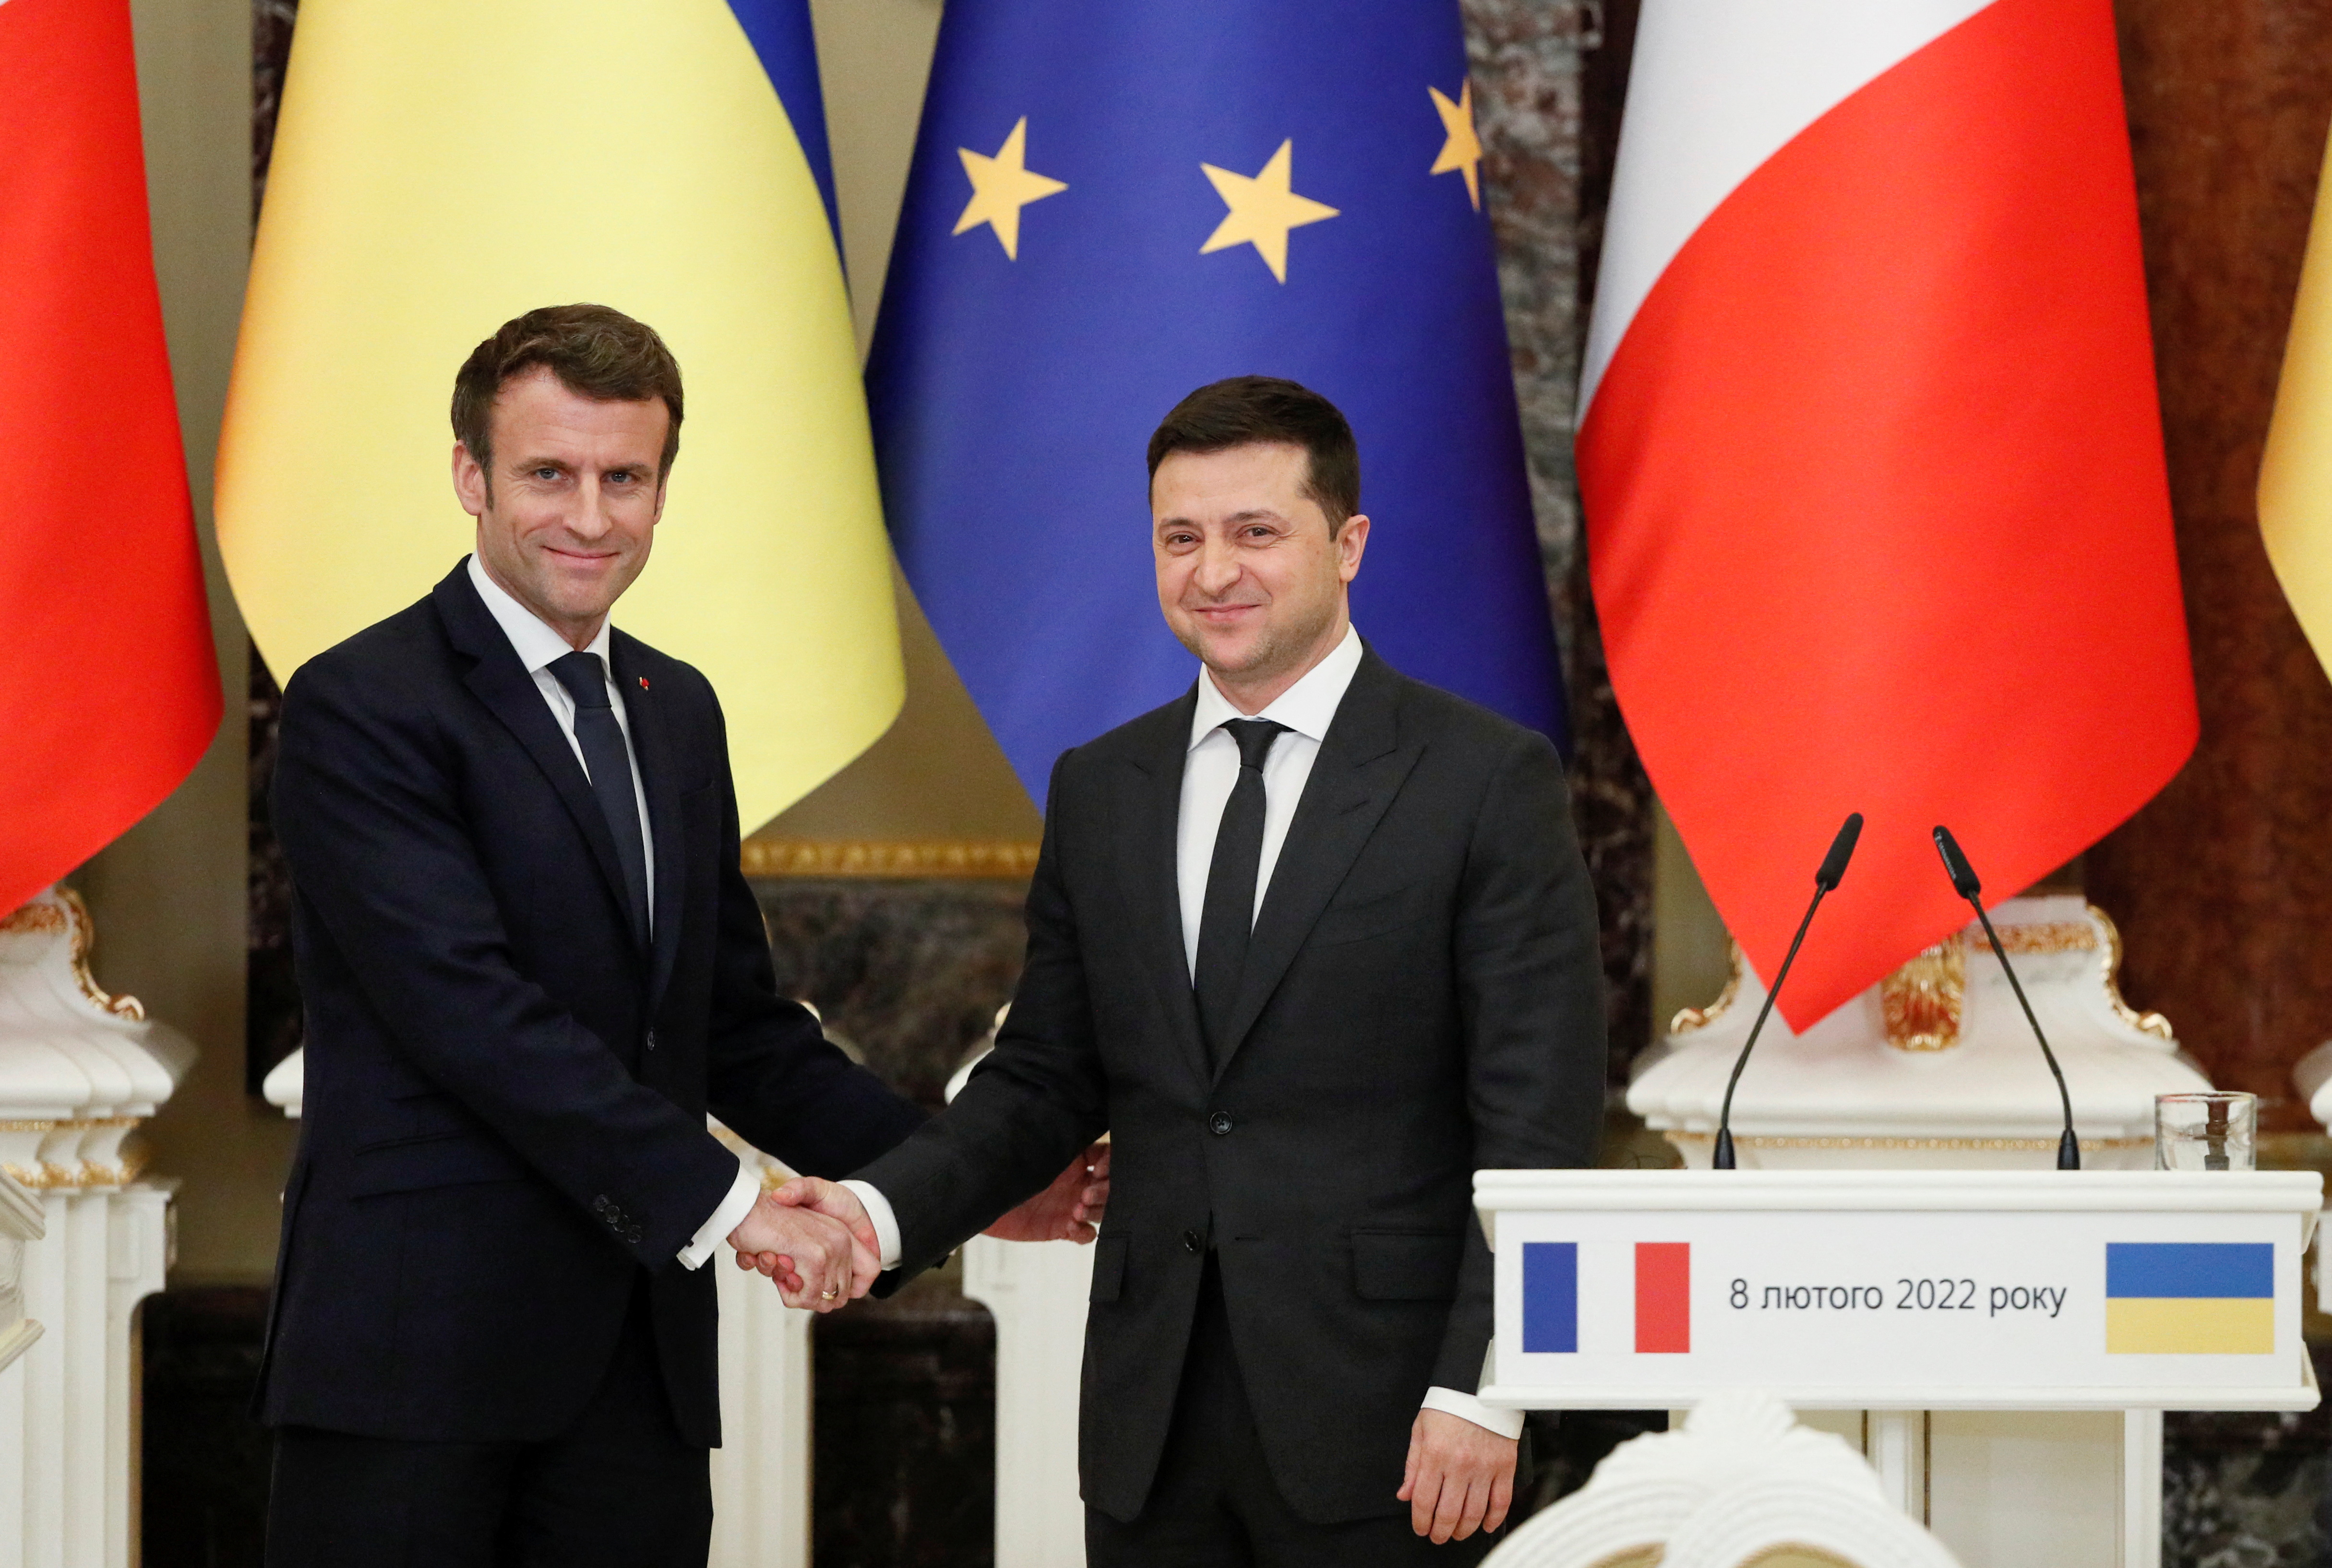 Ukrainian President Zelenskiy meets with French President Macron in Kyiv